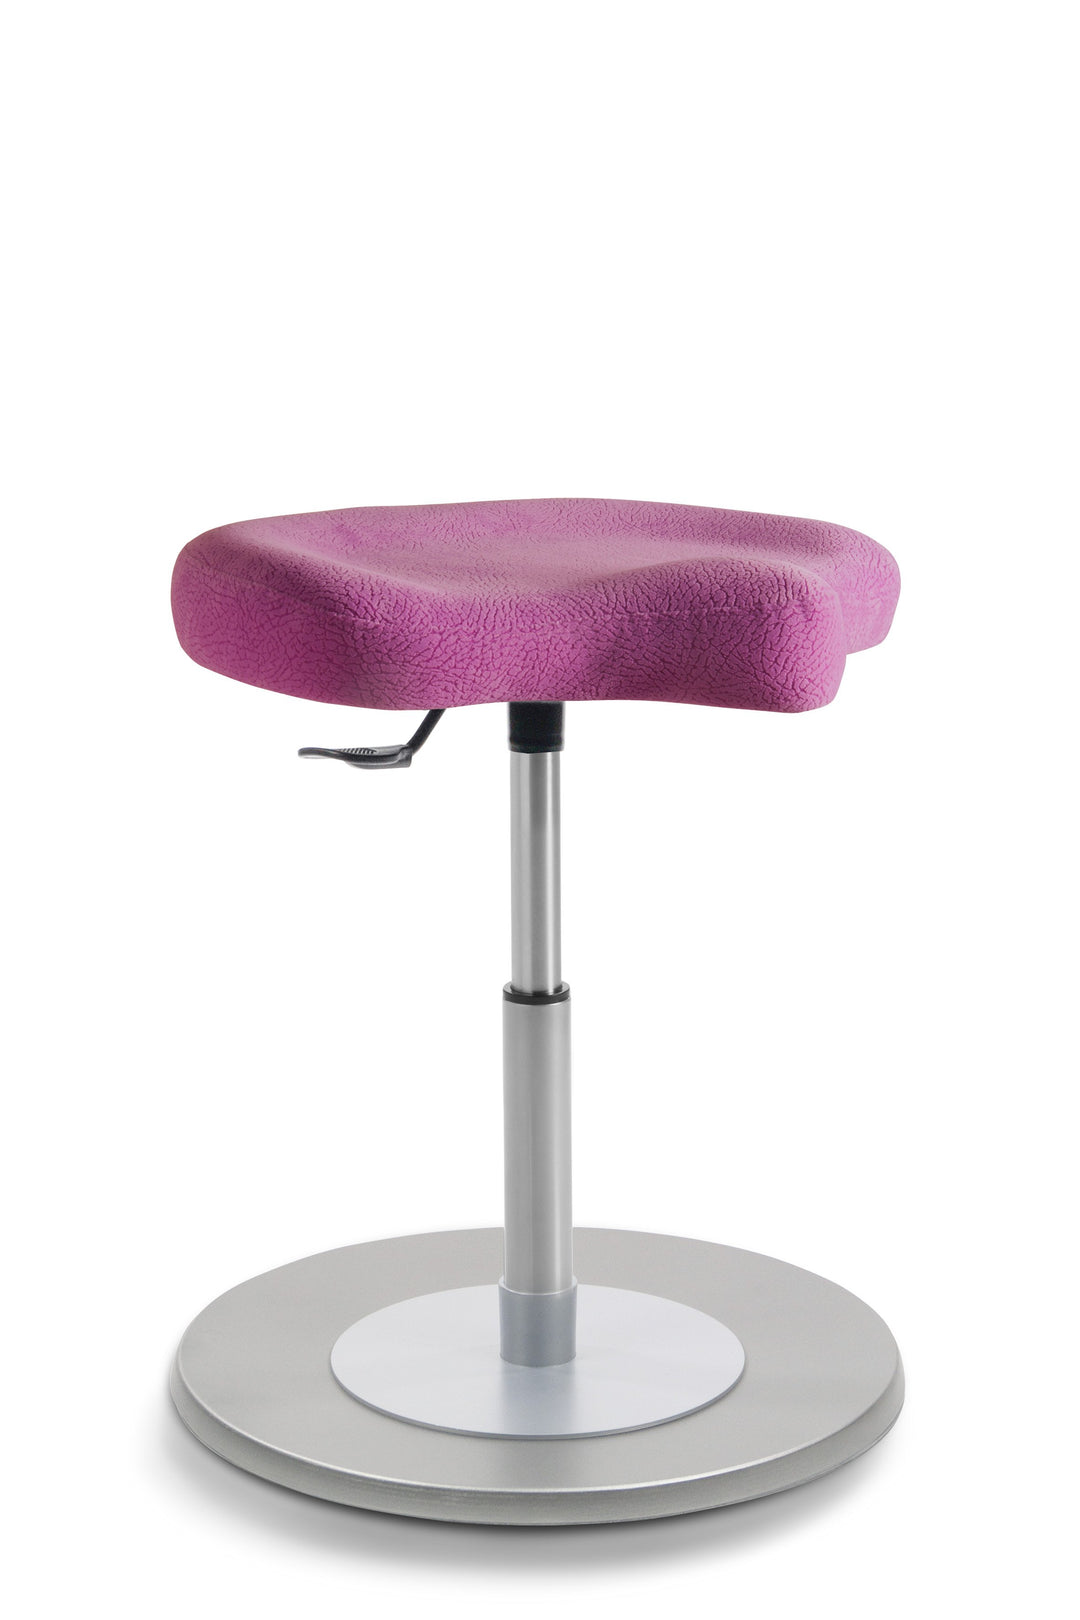 Mayer MyErgosit Taboret stołek balansujący krzesło ergonomiczny 37-50cm podstawa srebrna 1169 EF